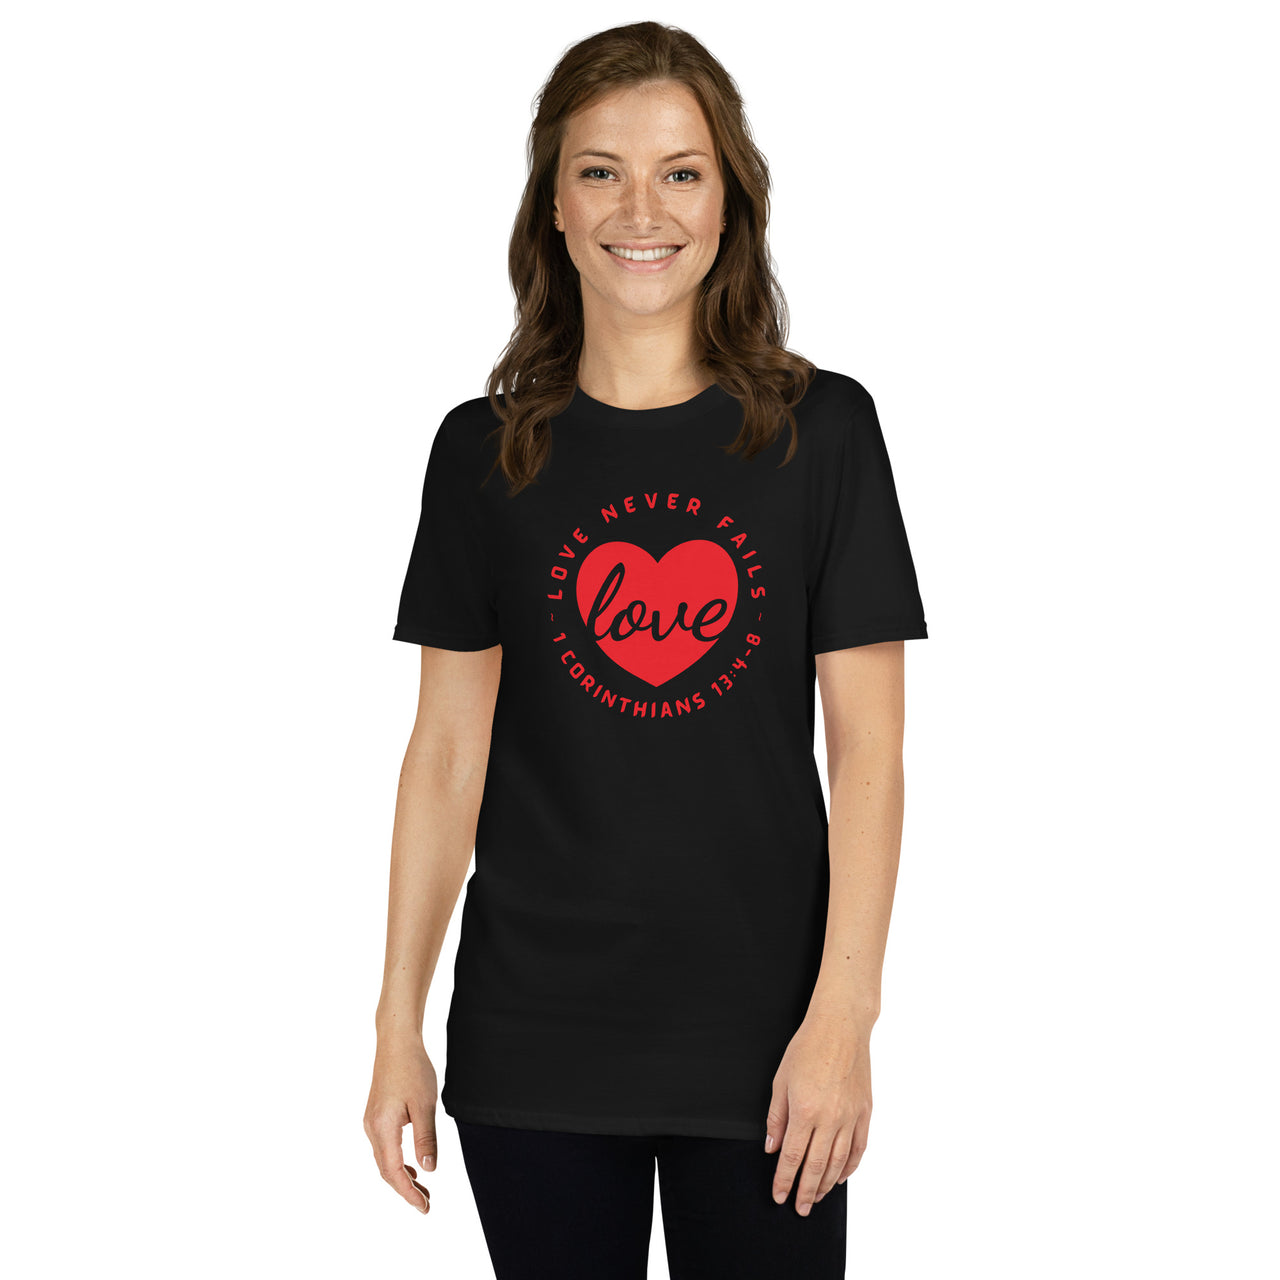 "Love Never Fails" Unisex Softstyle T-Shirt 13